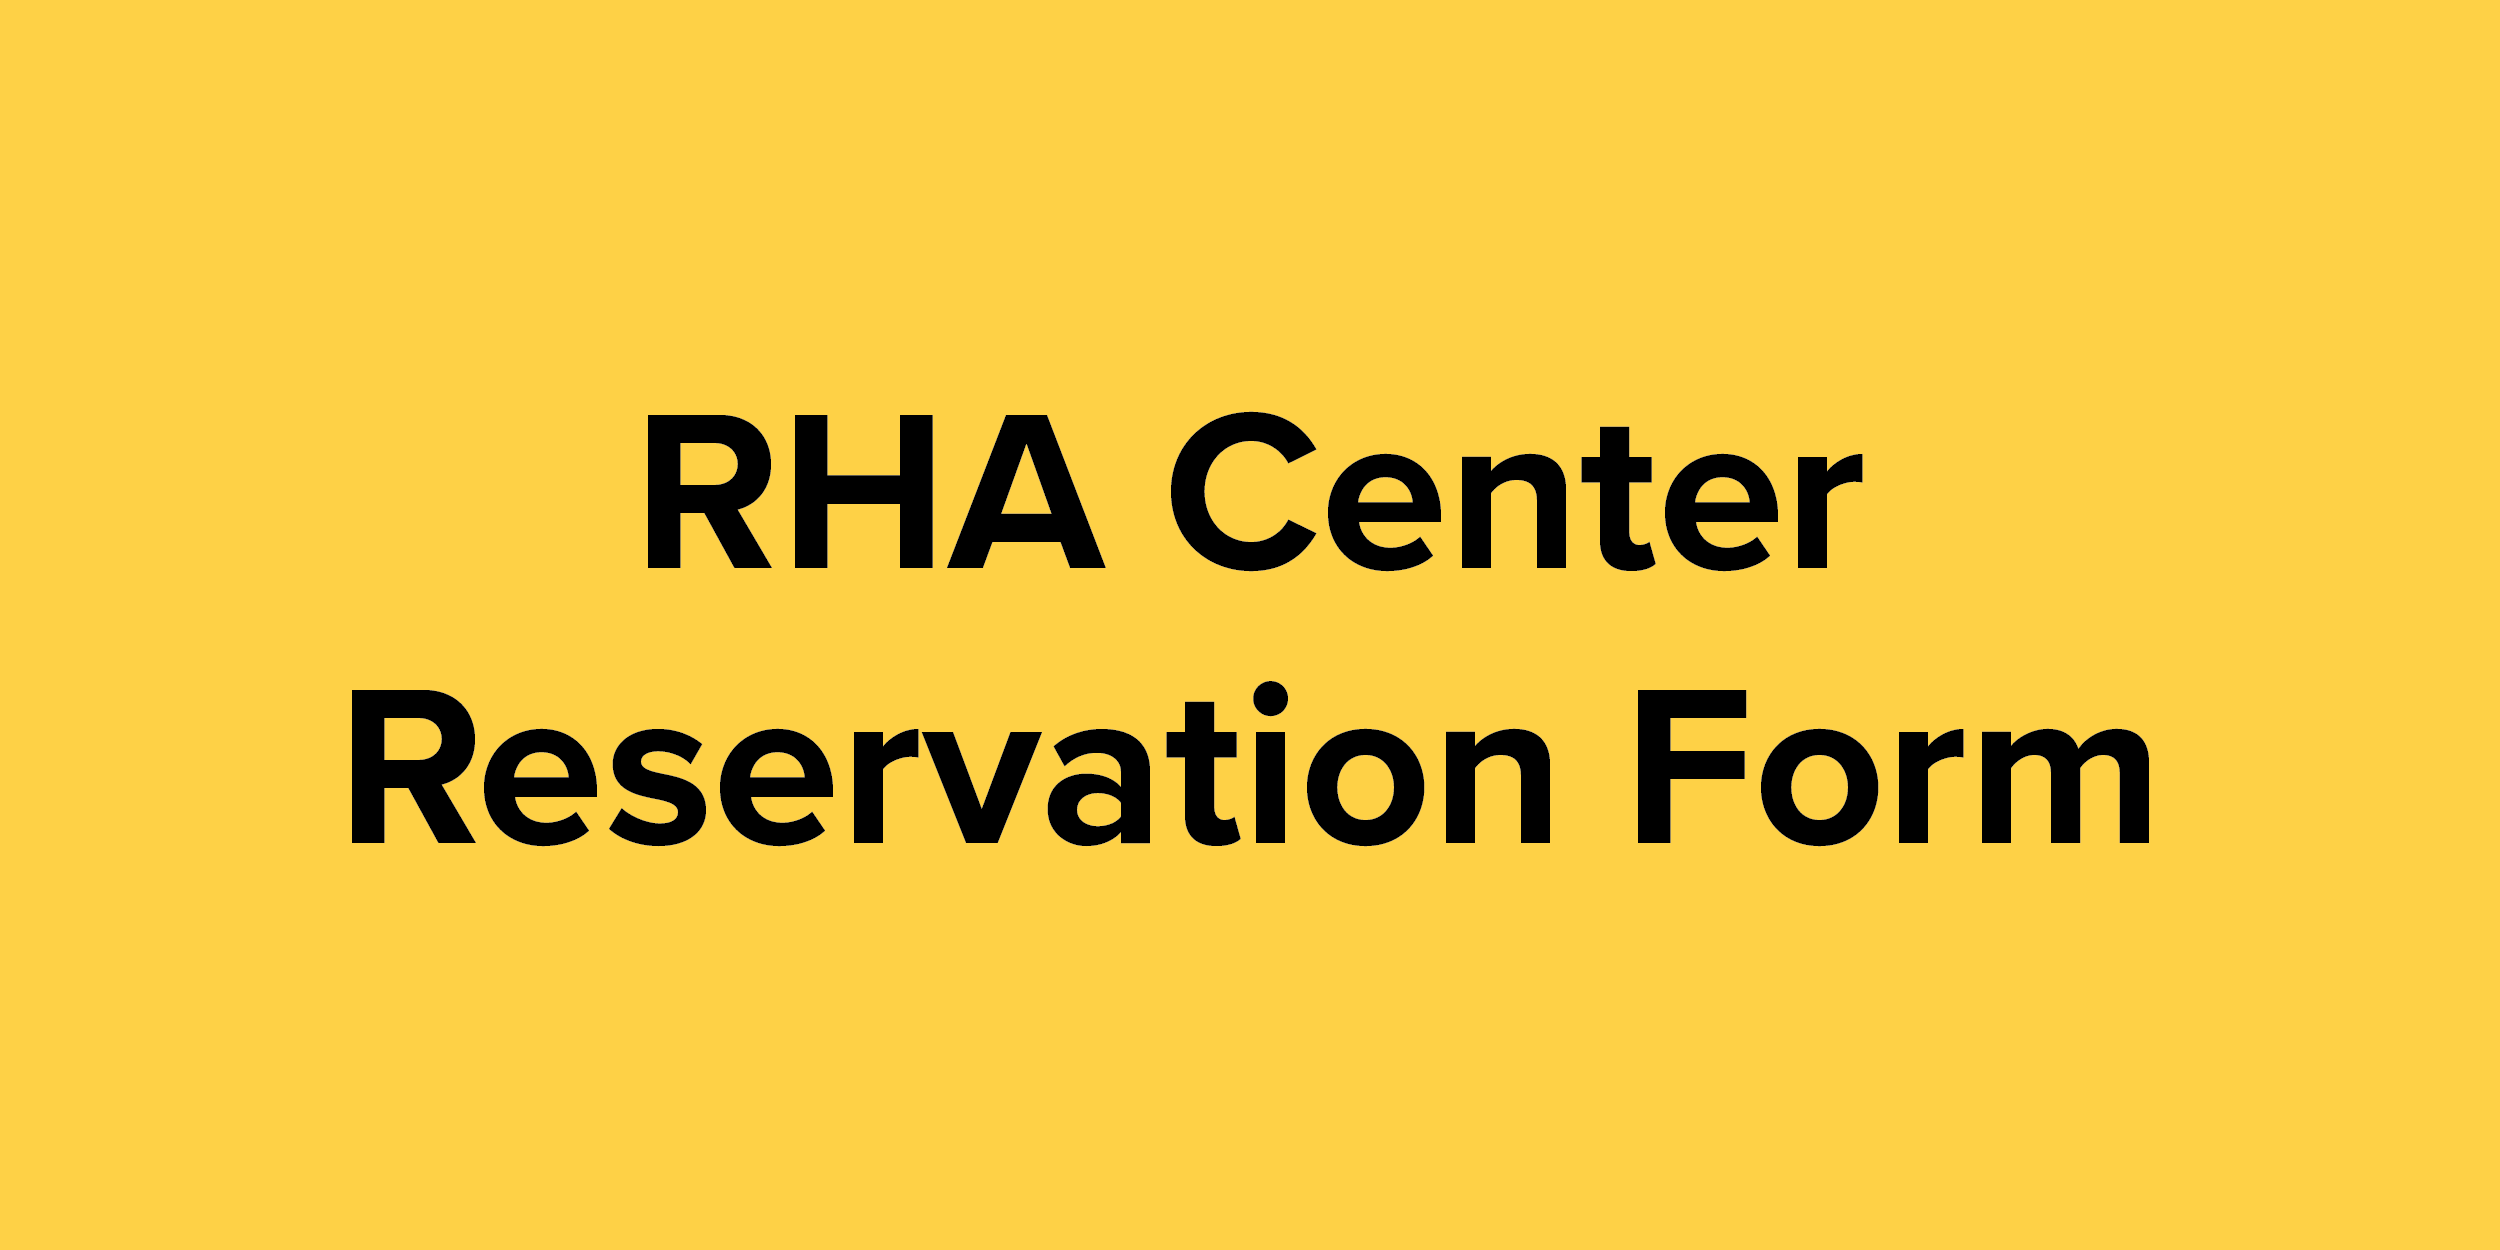 RHA Center Reservation Form